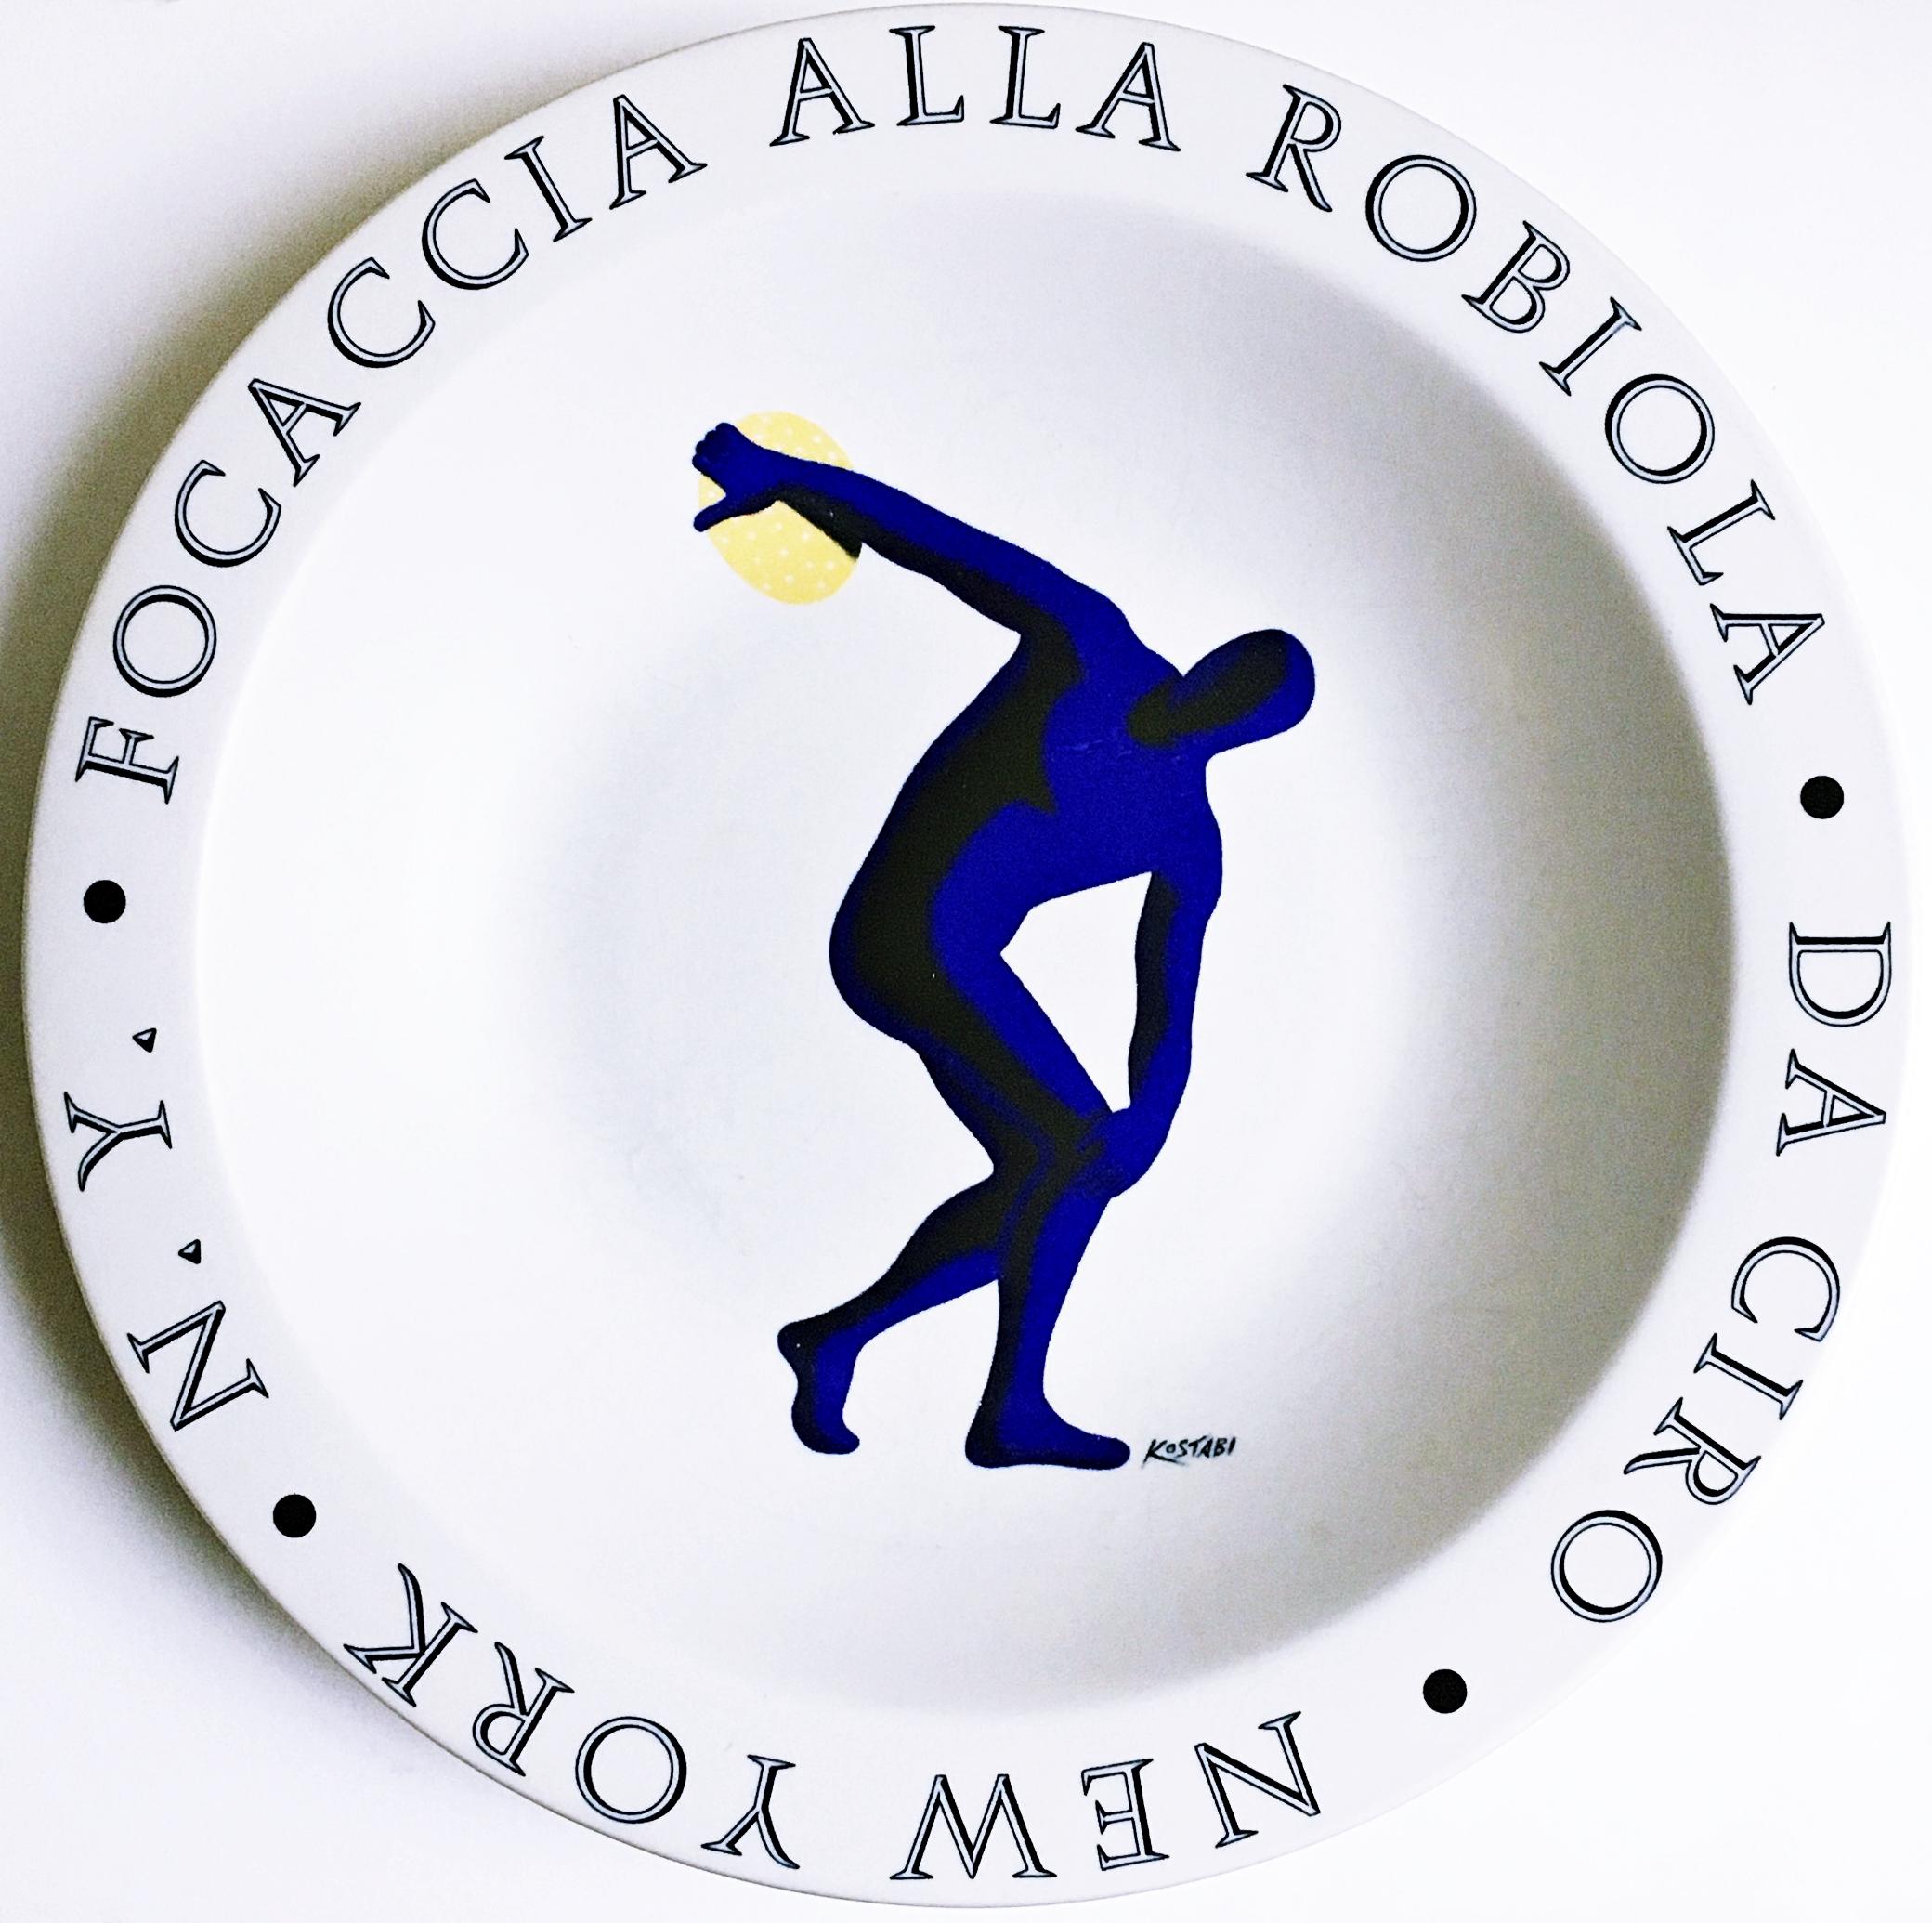 Focaccia Alla Robiola - Da Ciro - New York, NY - Print by Mark Kostabi